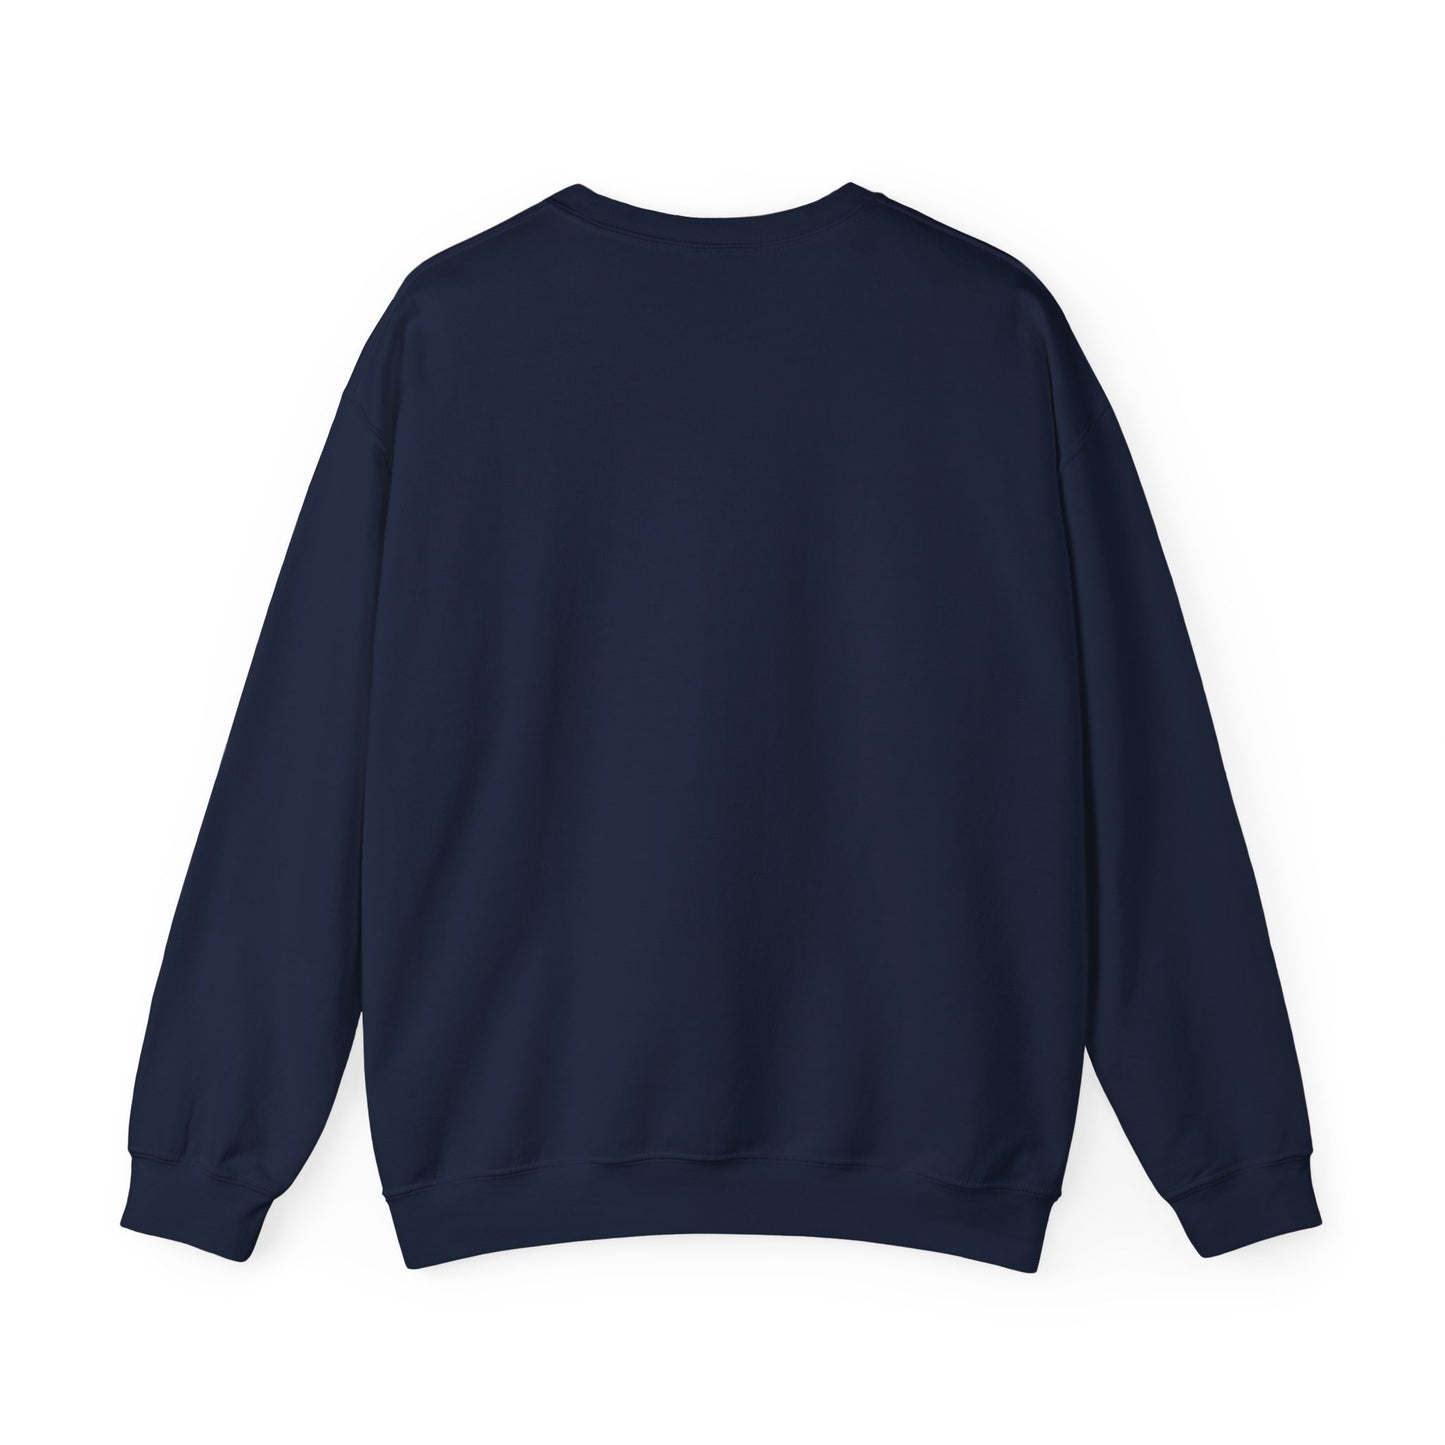 Cool Softball Mom's Club - Unisex Heavy Blend™ Crewneck Sweatshirt